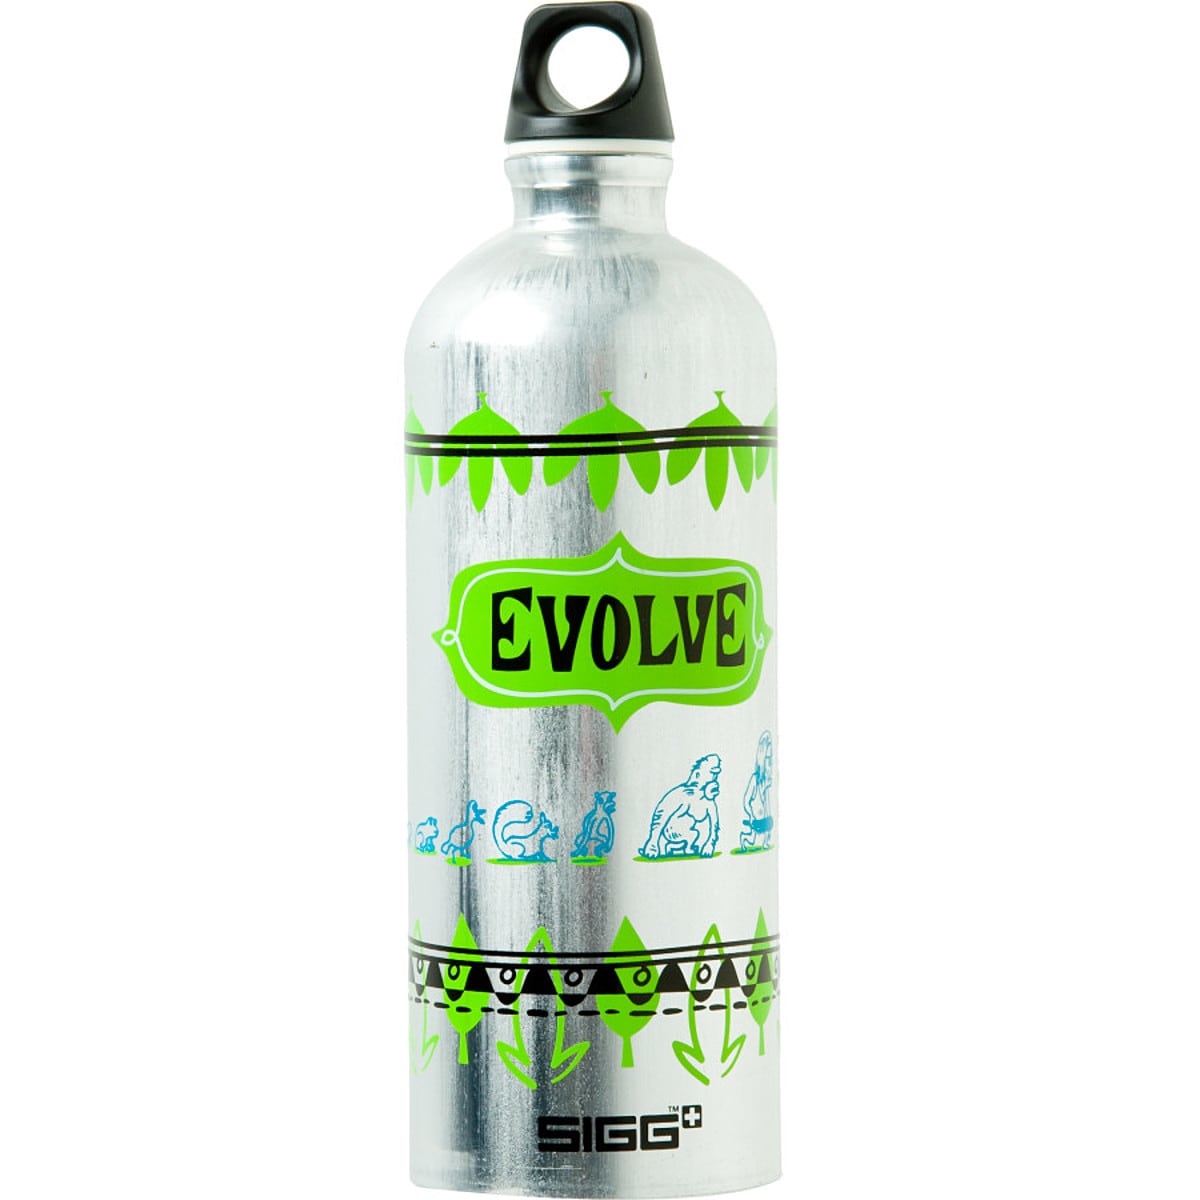 Sigg Water Bottle - 1L - Accessories